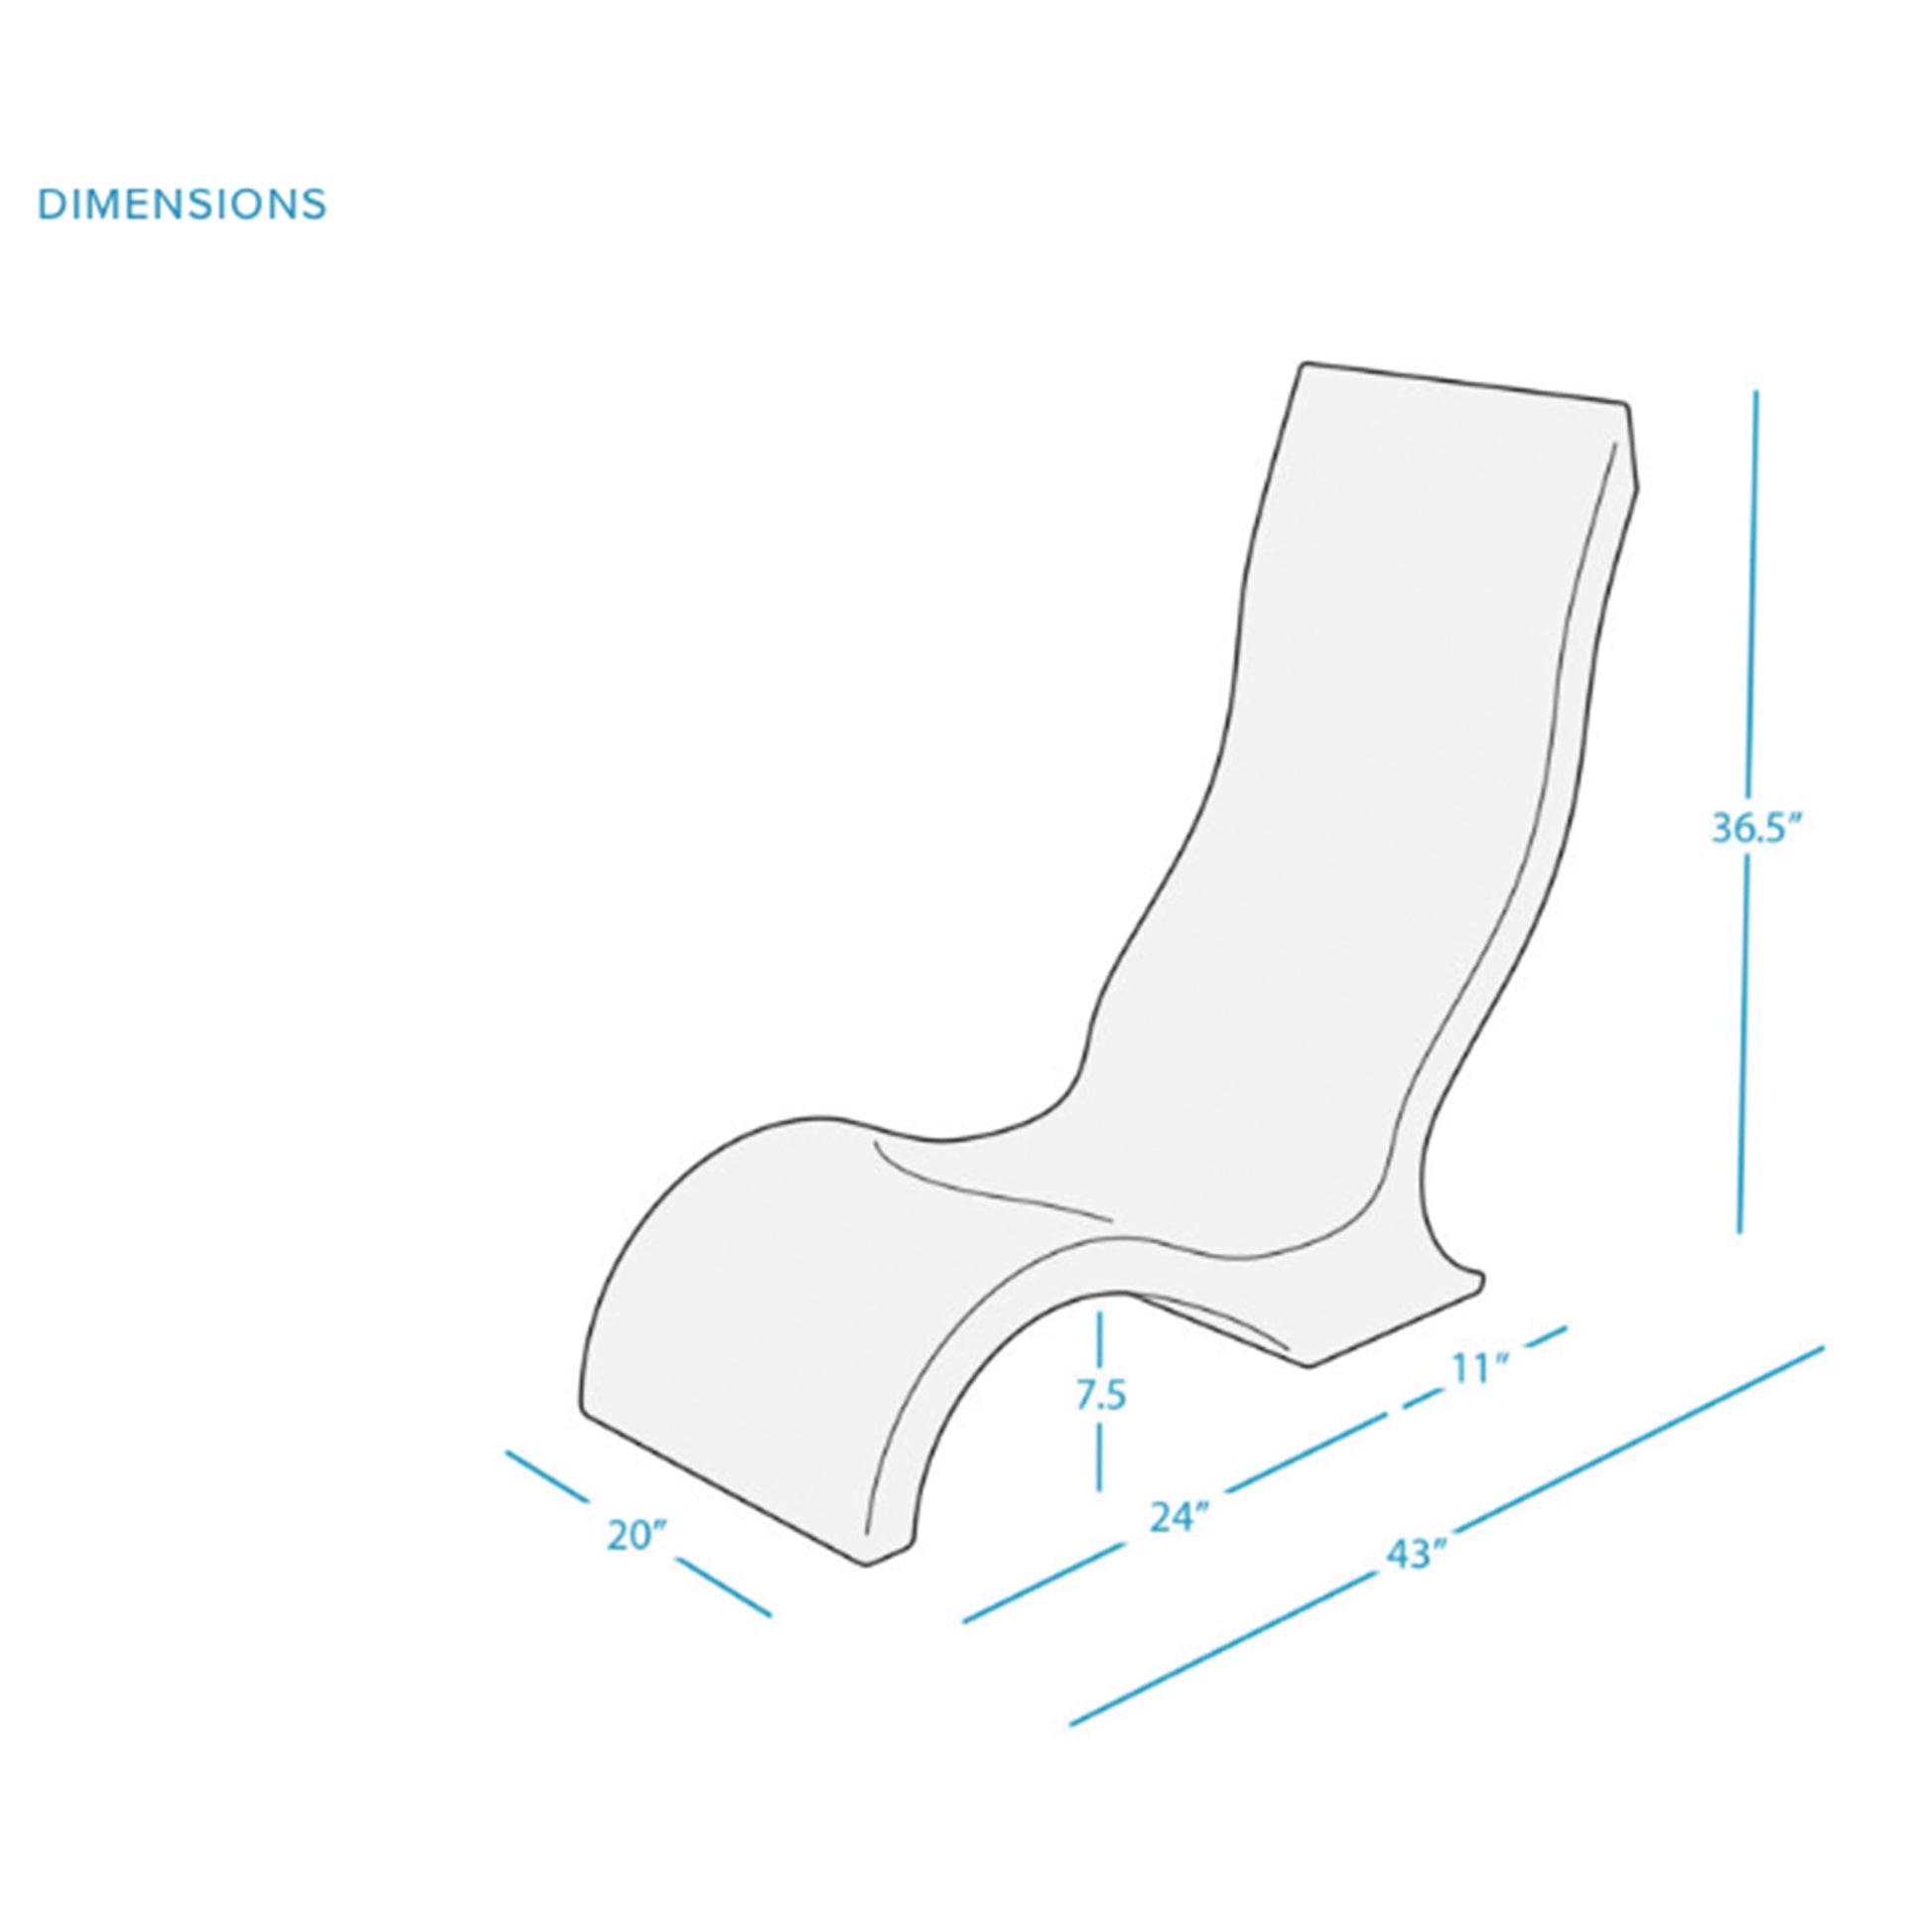 Ledge Lounger Signature Chair dimensions